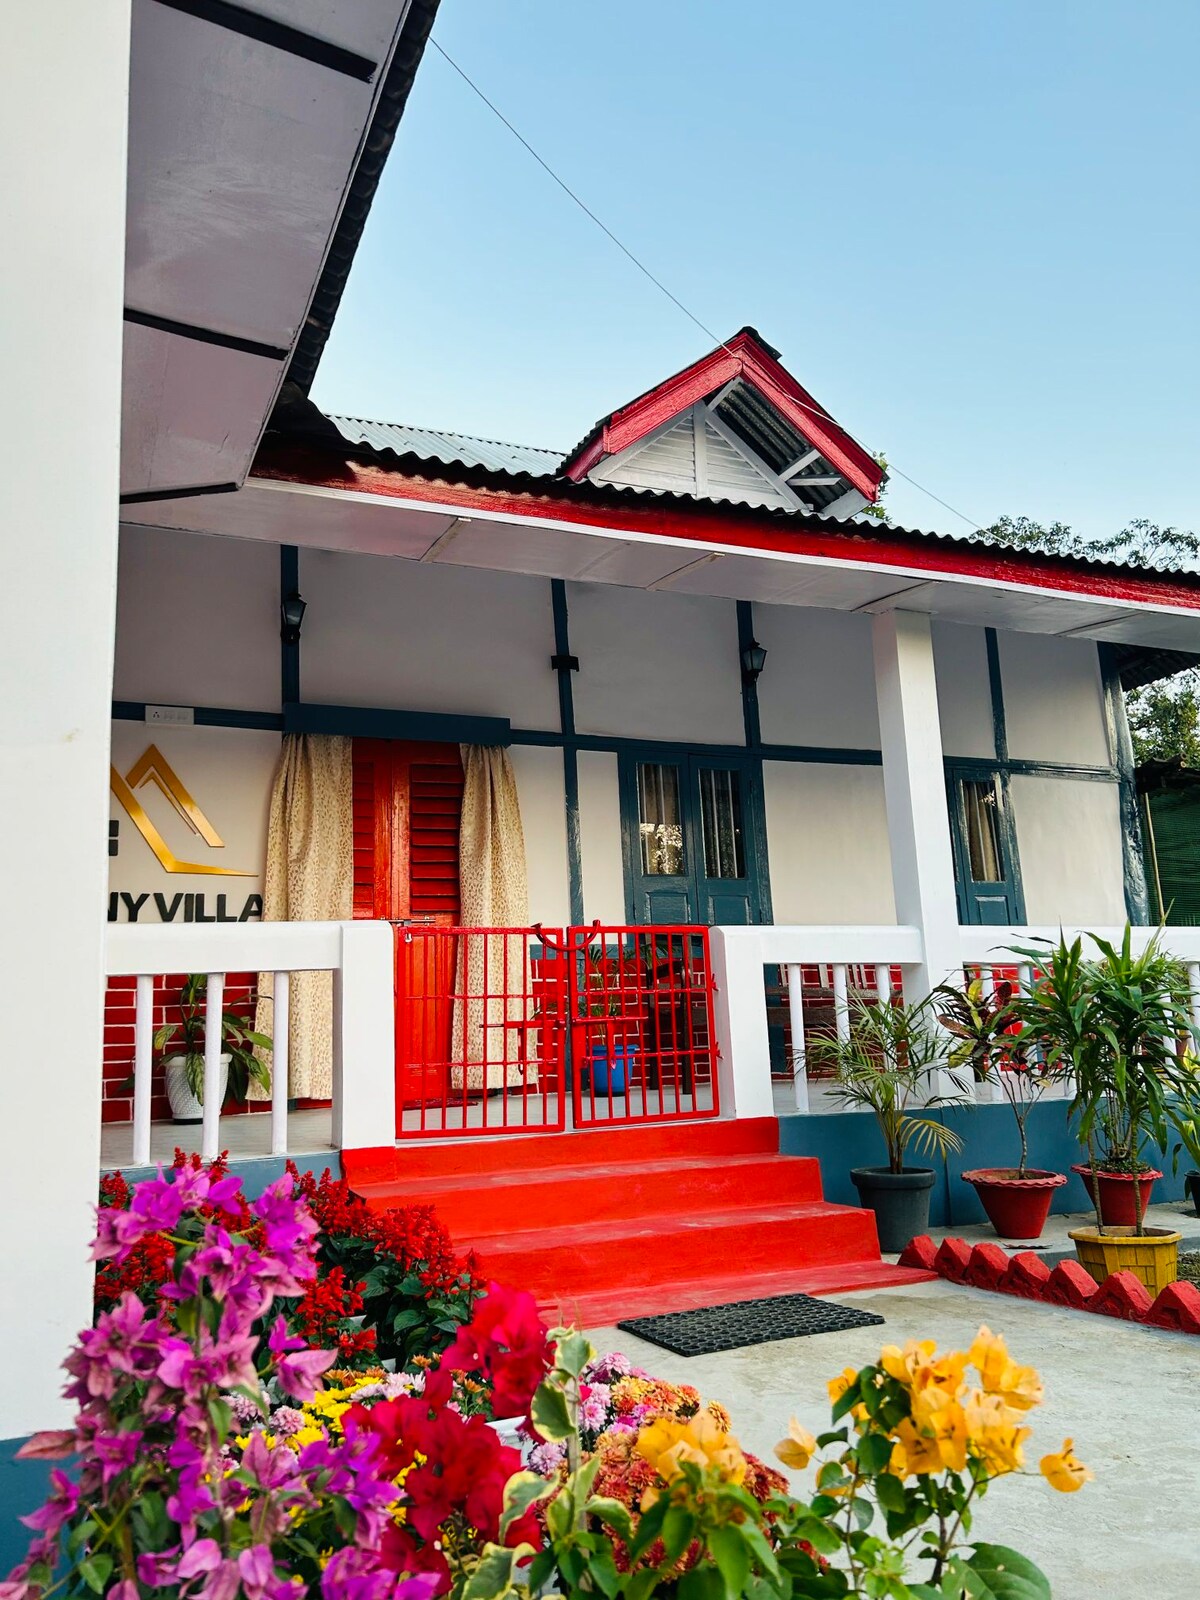 Sunny Villa 
Since 1950